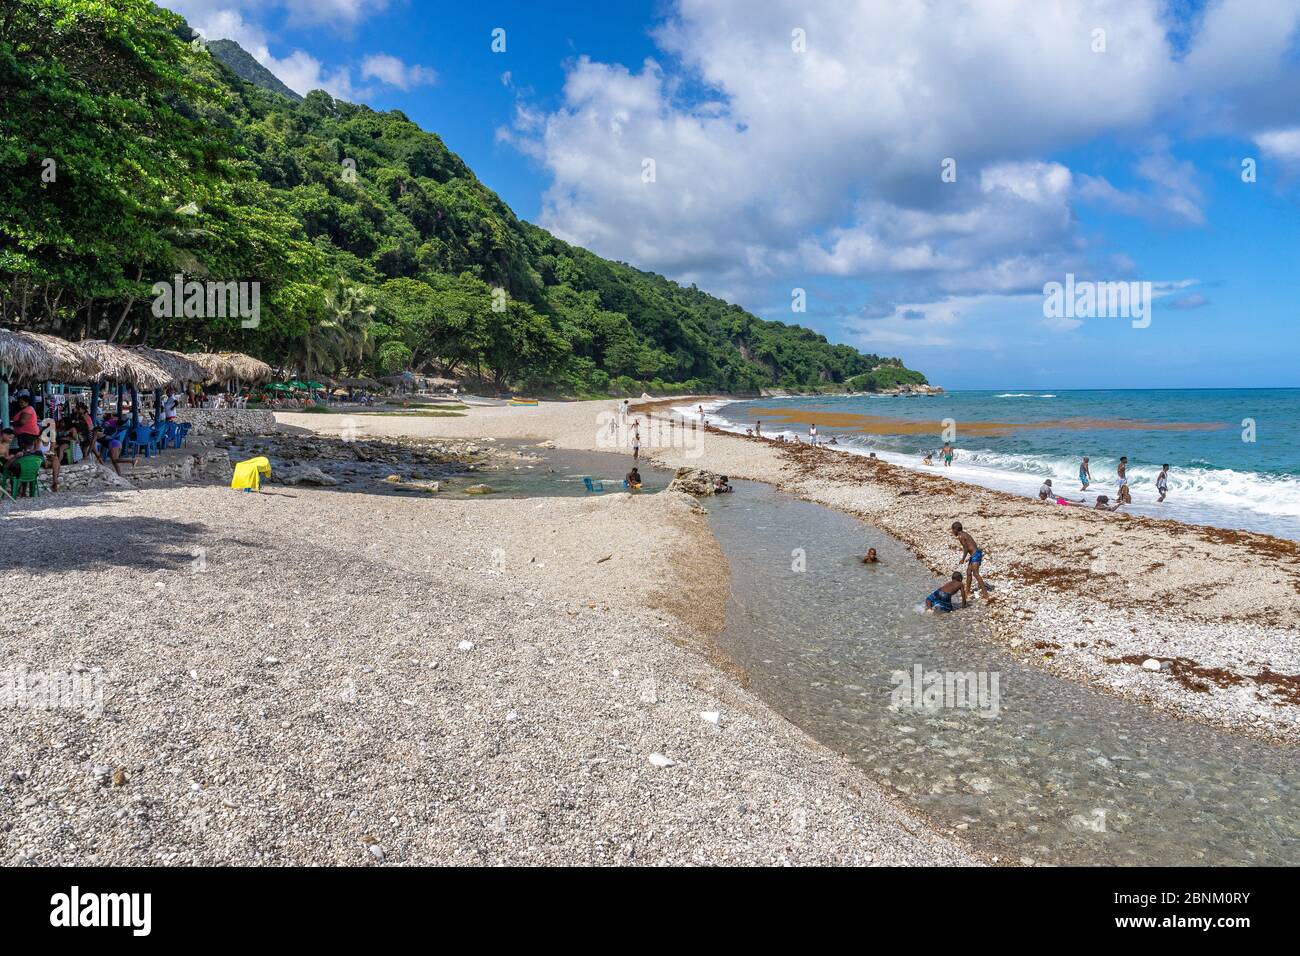 America, Caribbean, Greater Antilles, Dominican Republic, Barahona, San Rafael, beach scene at Playa San Rafael Stock Photo